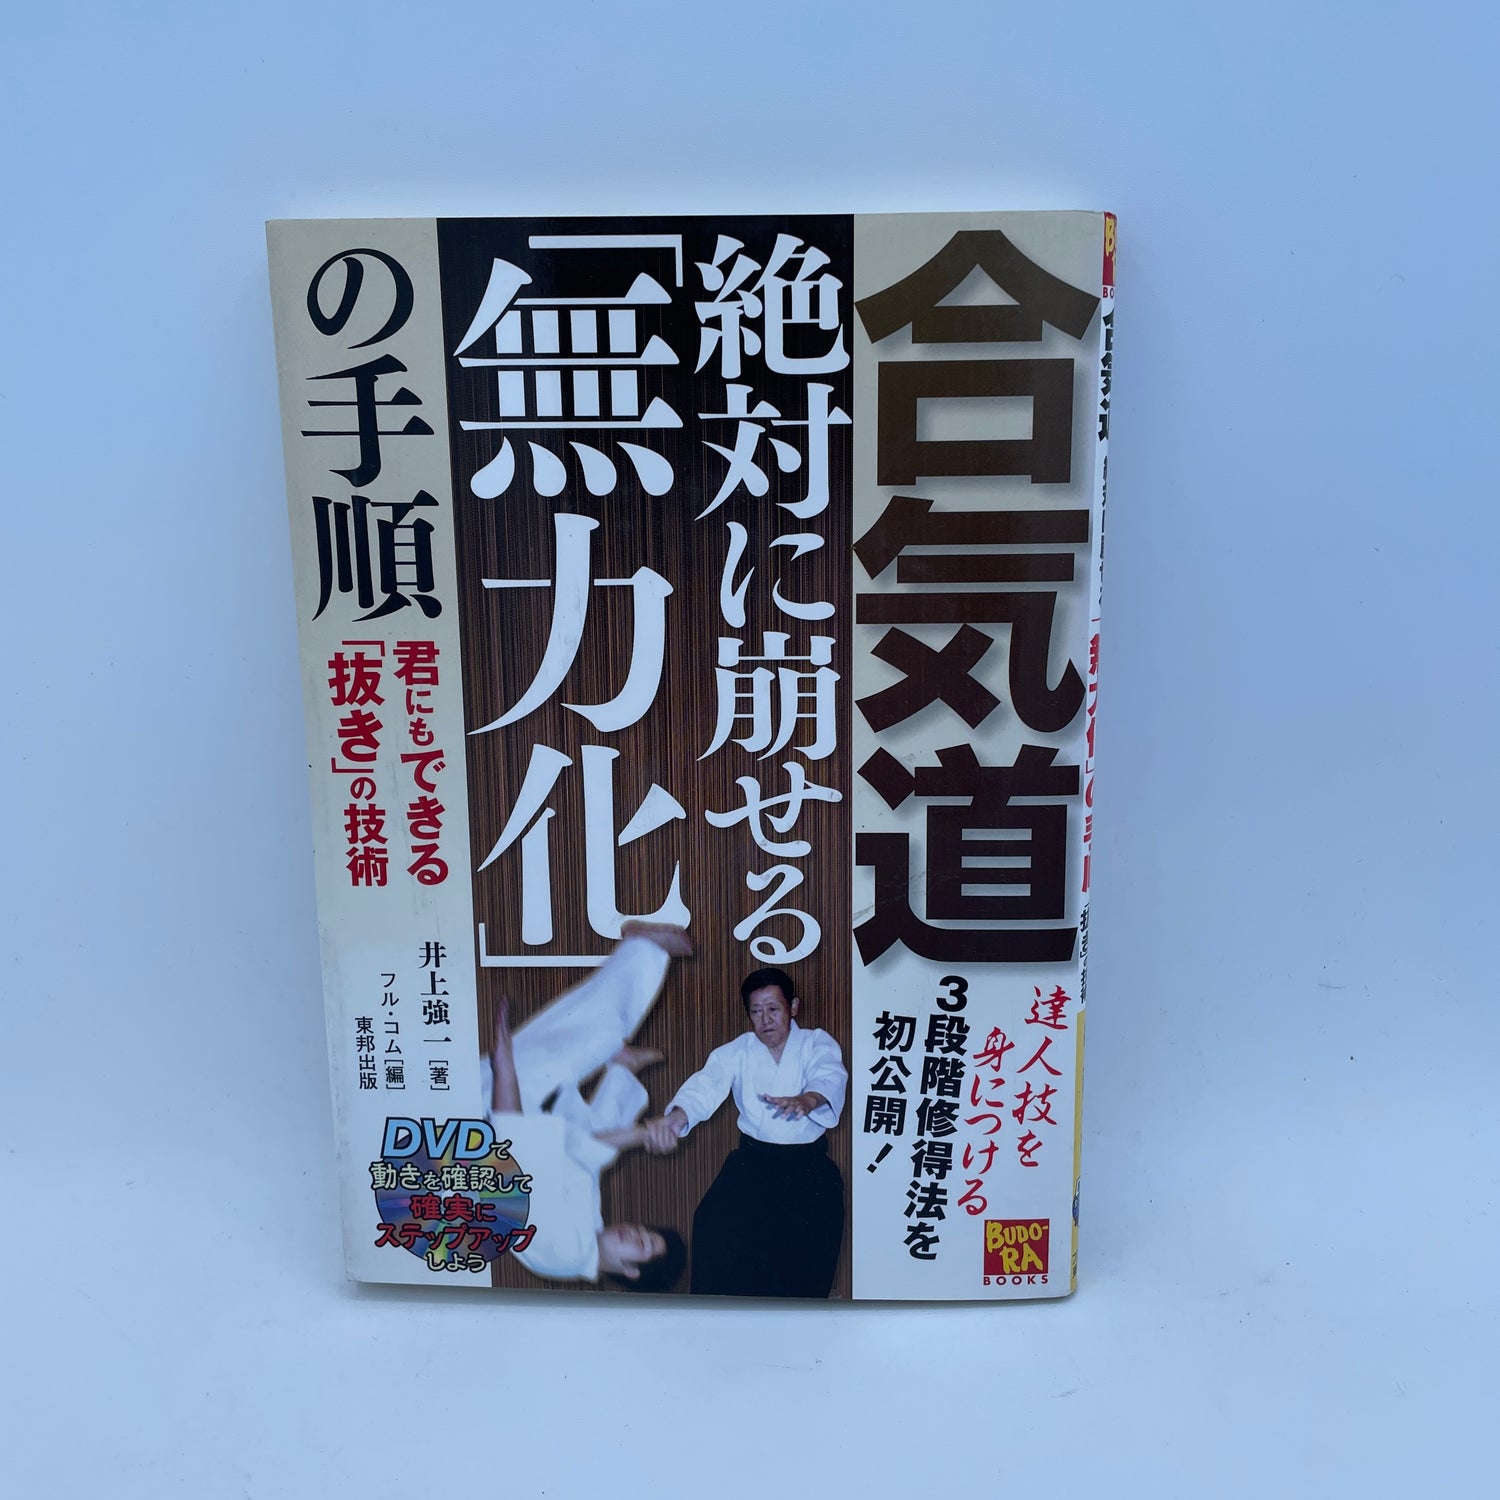 Aikido Muryoka Book & DVD by Kyoichi Inoue (Preowned)